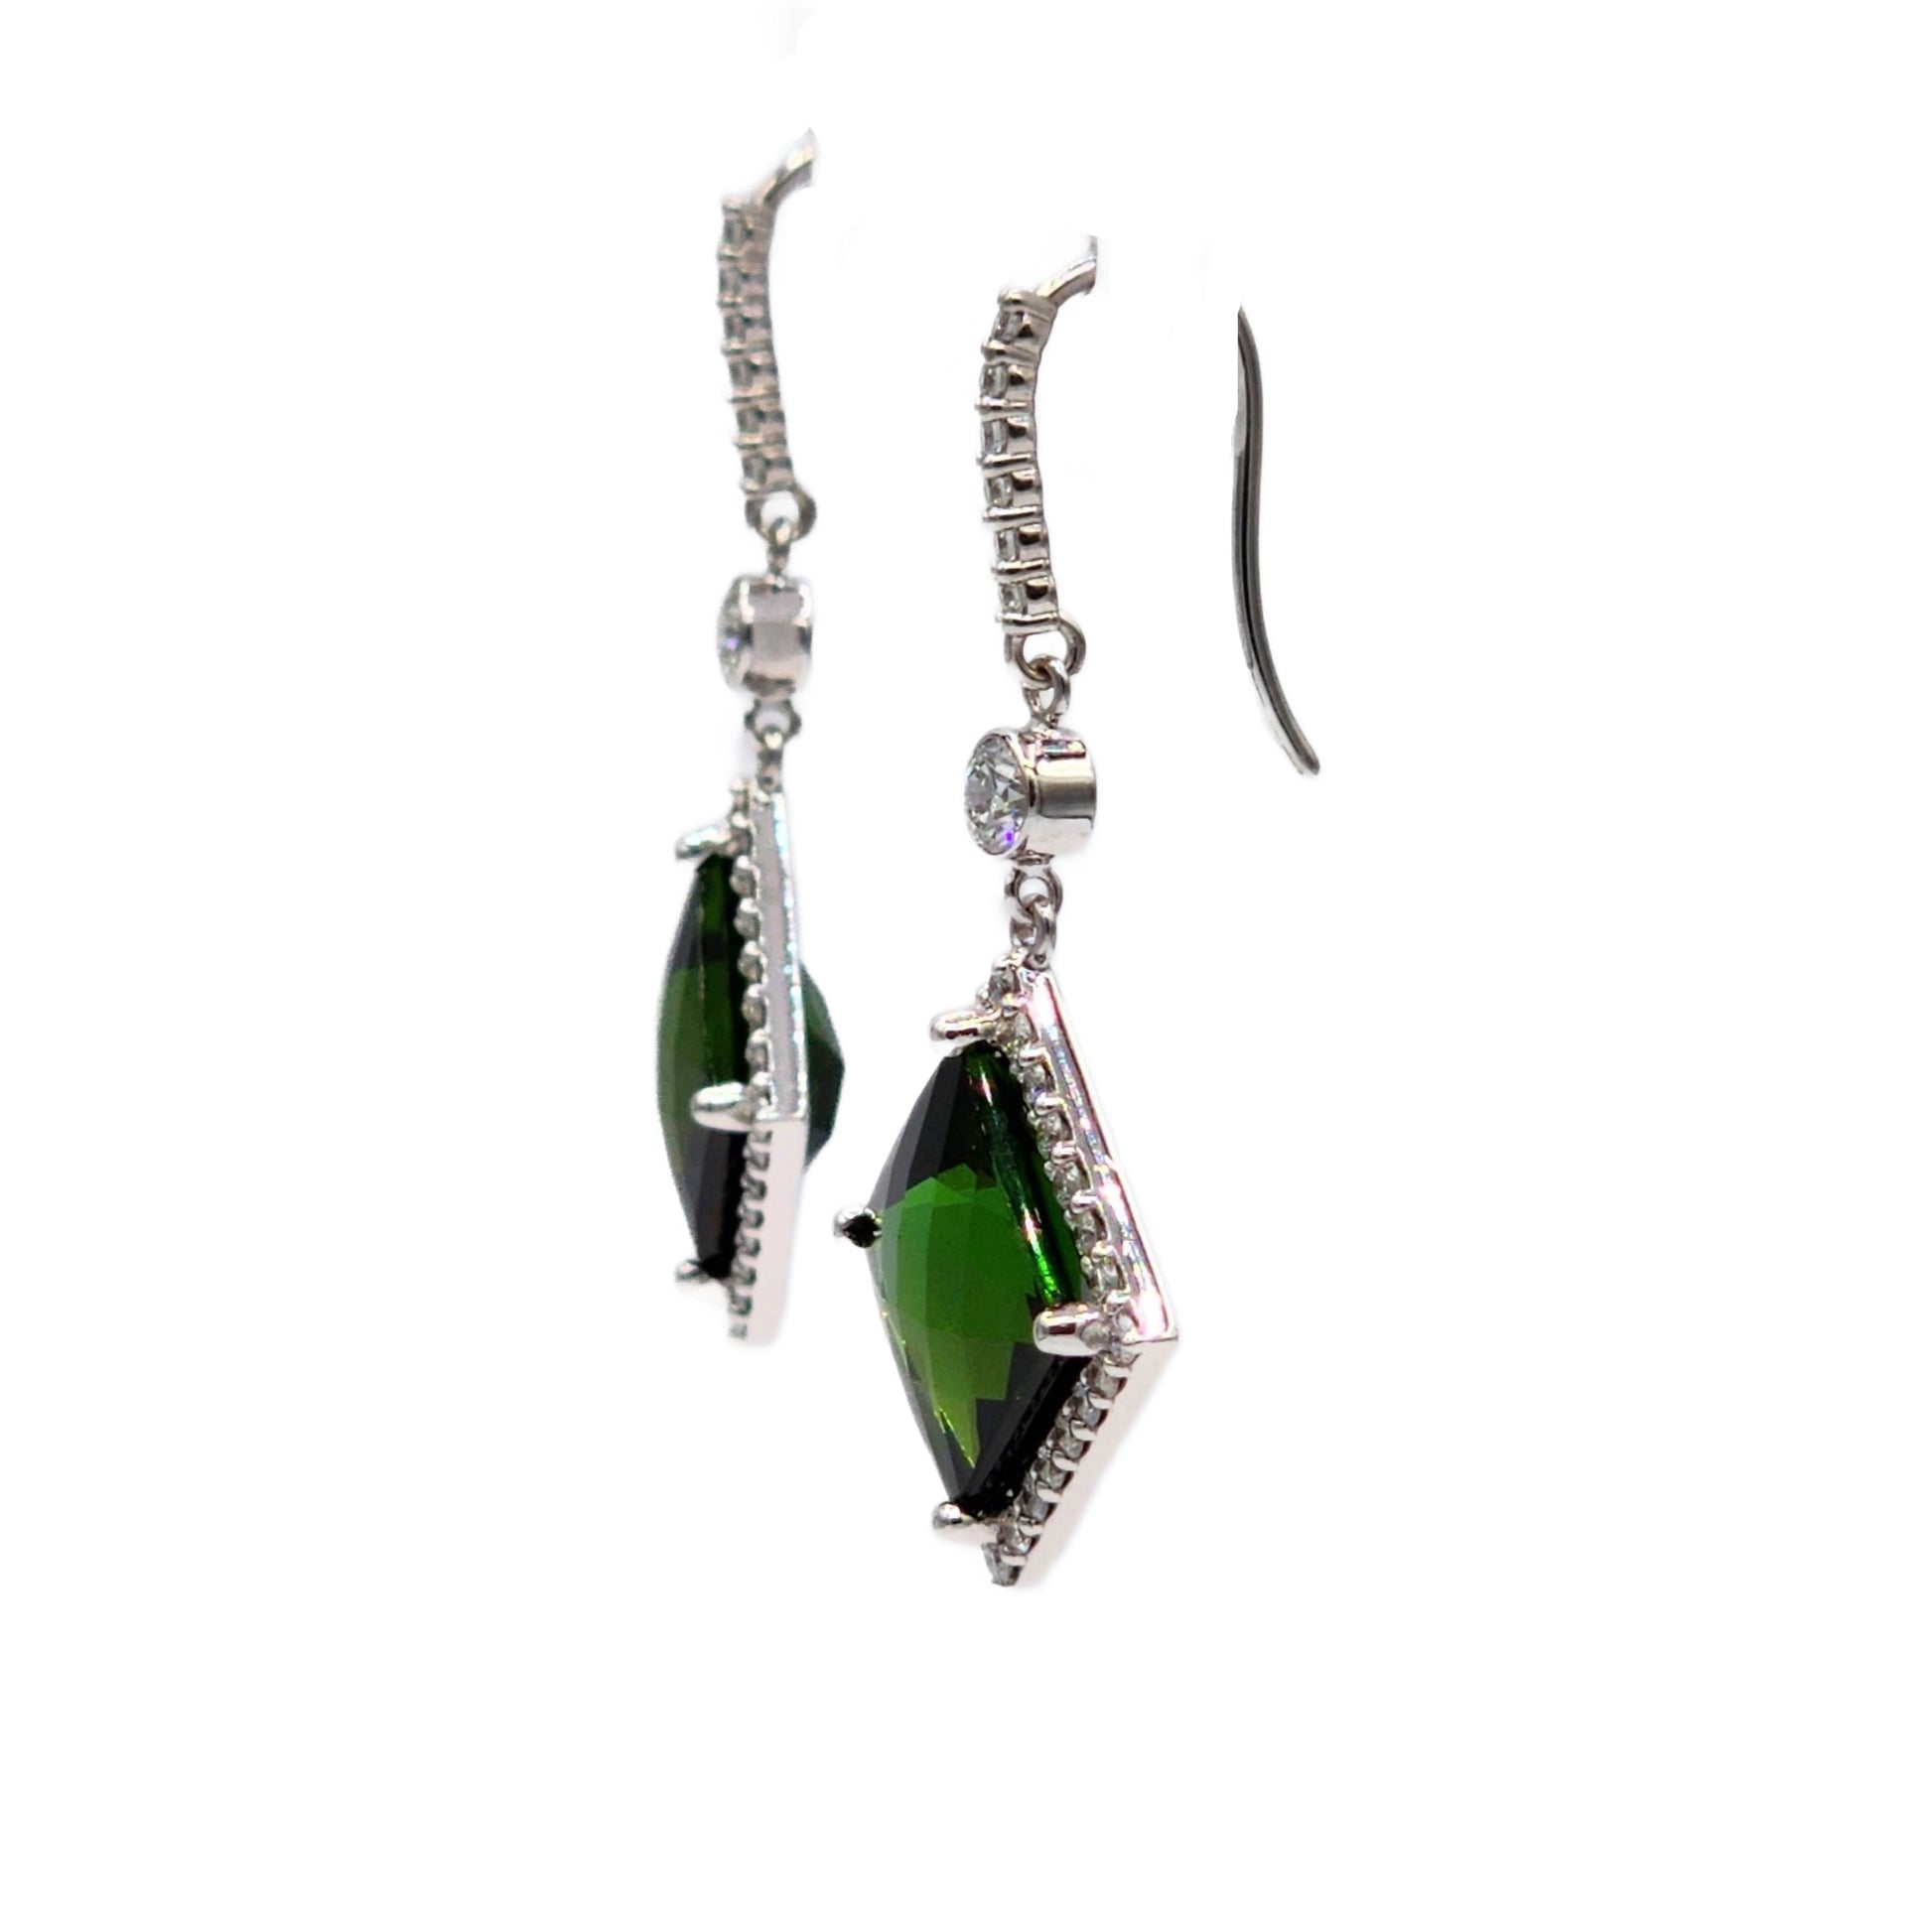 17.26 Carat Green Tourmaline and 1.89 Carat Diamond Earrings in 14K